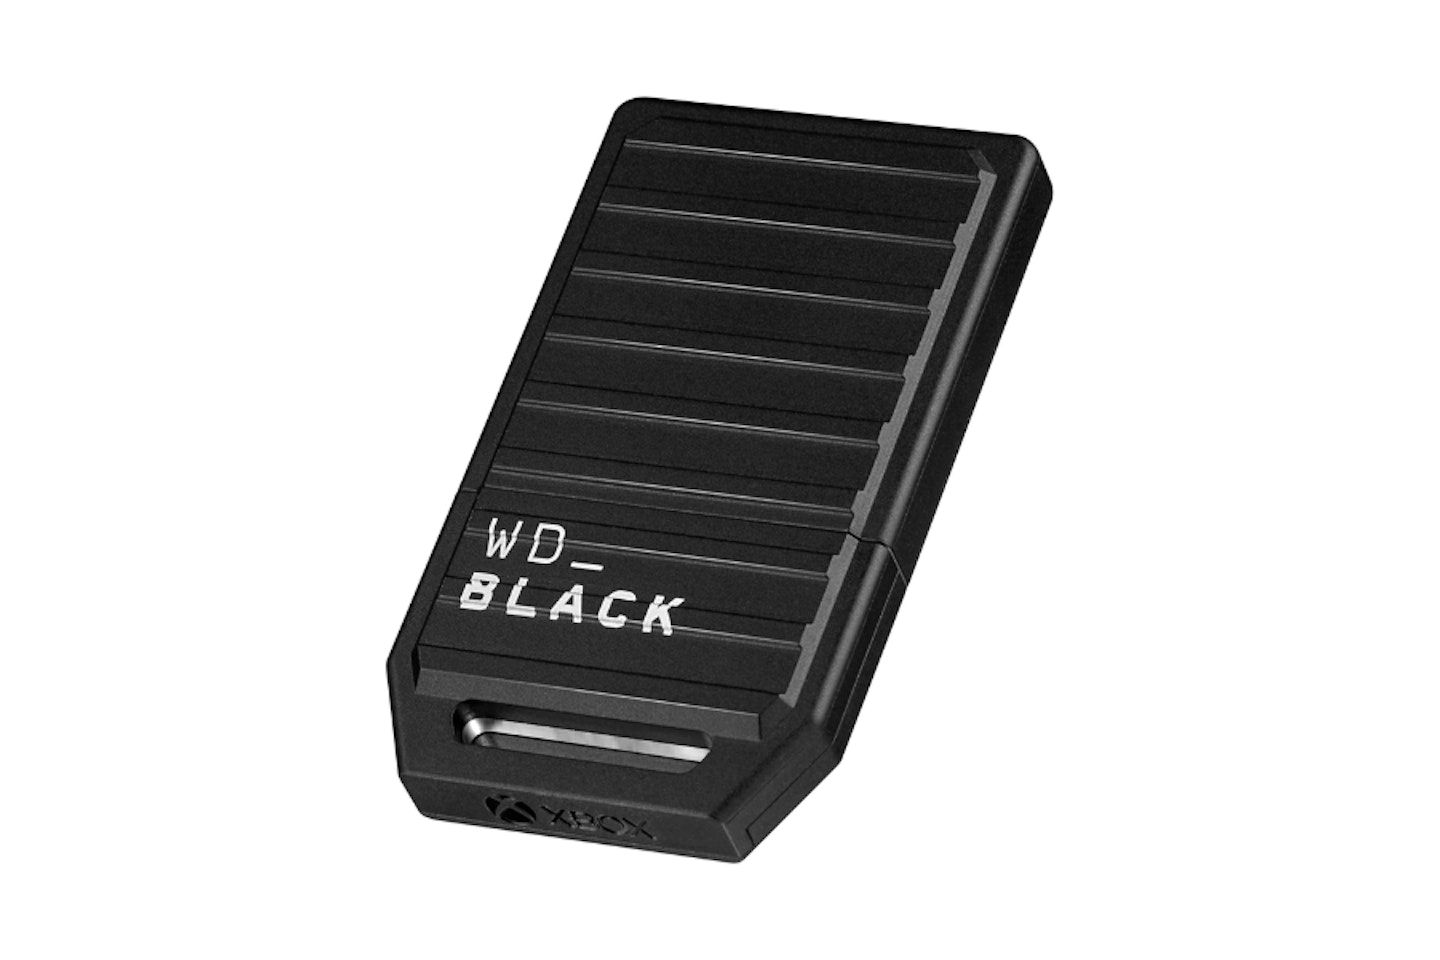 WD_BLACK 1TB C50 Expansion Card